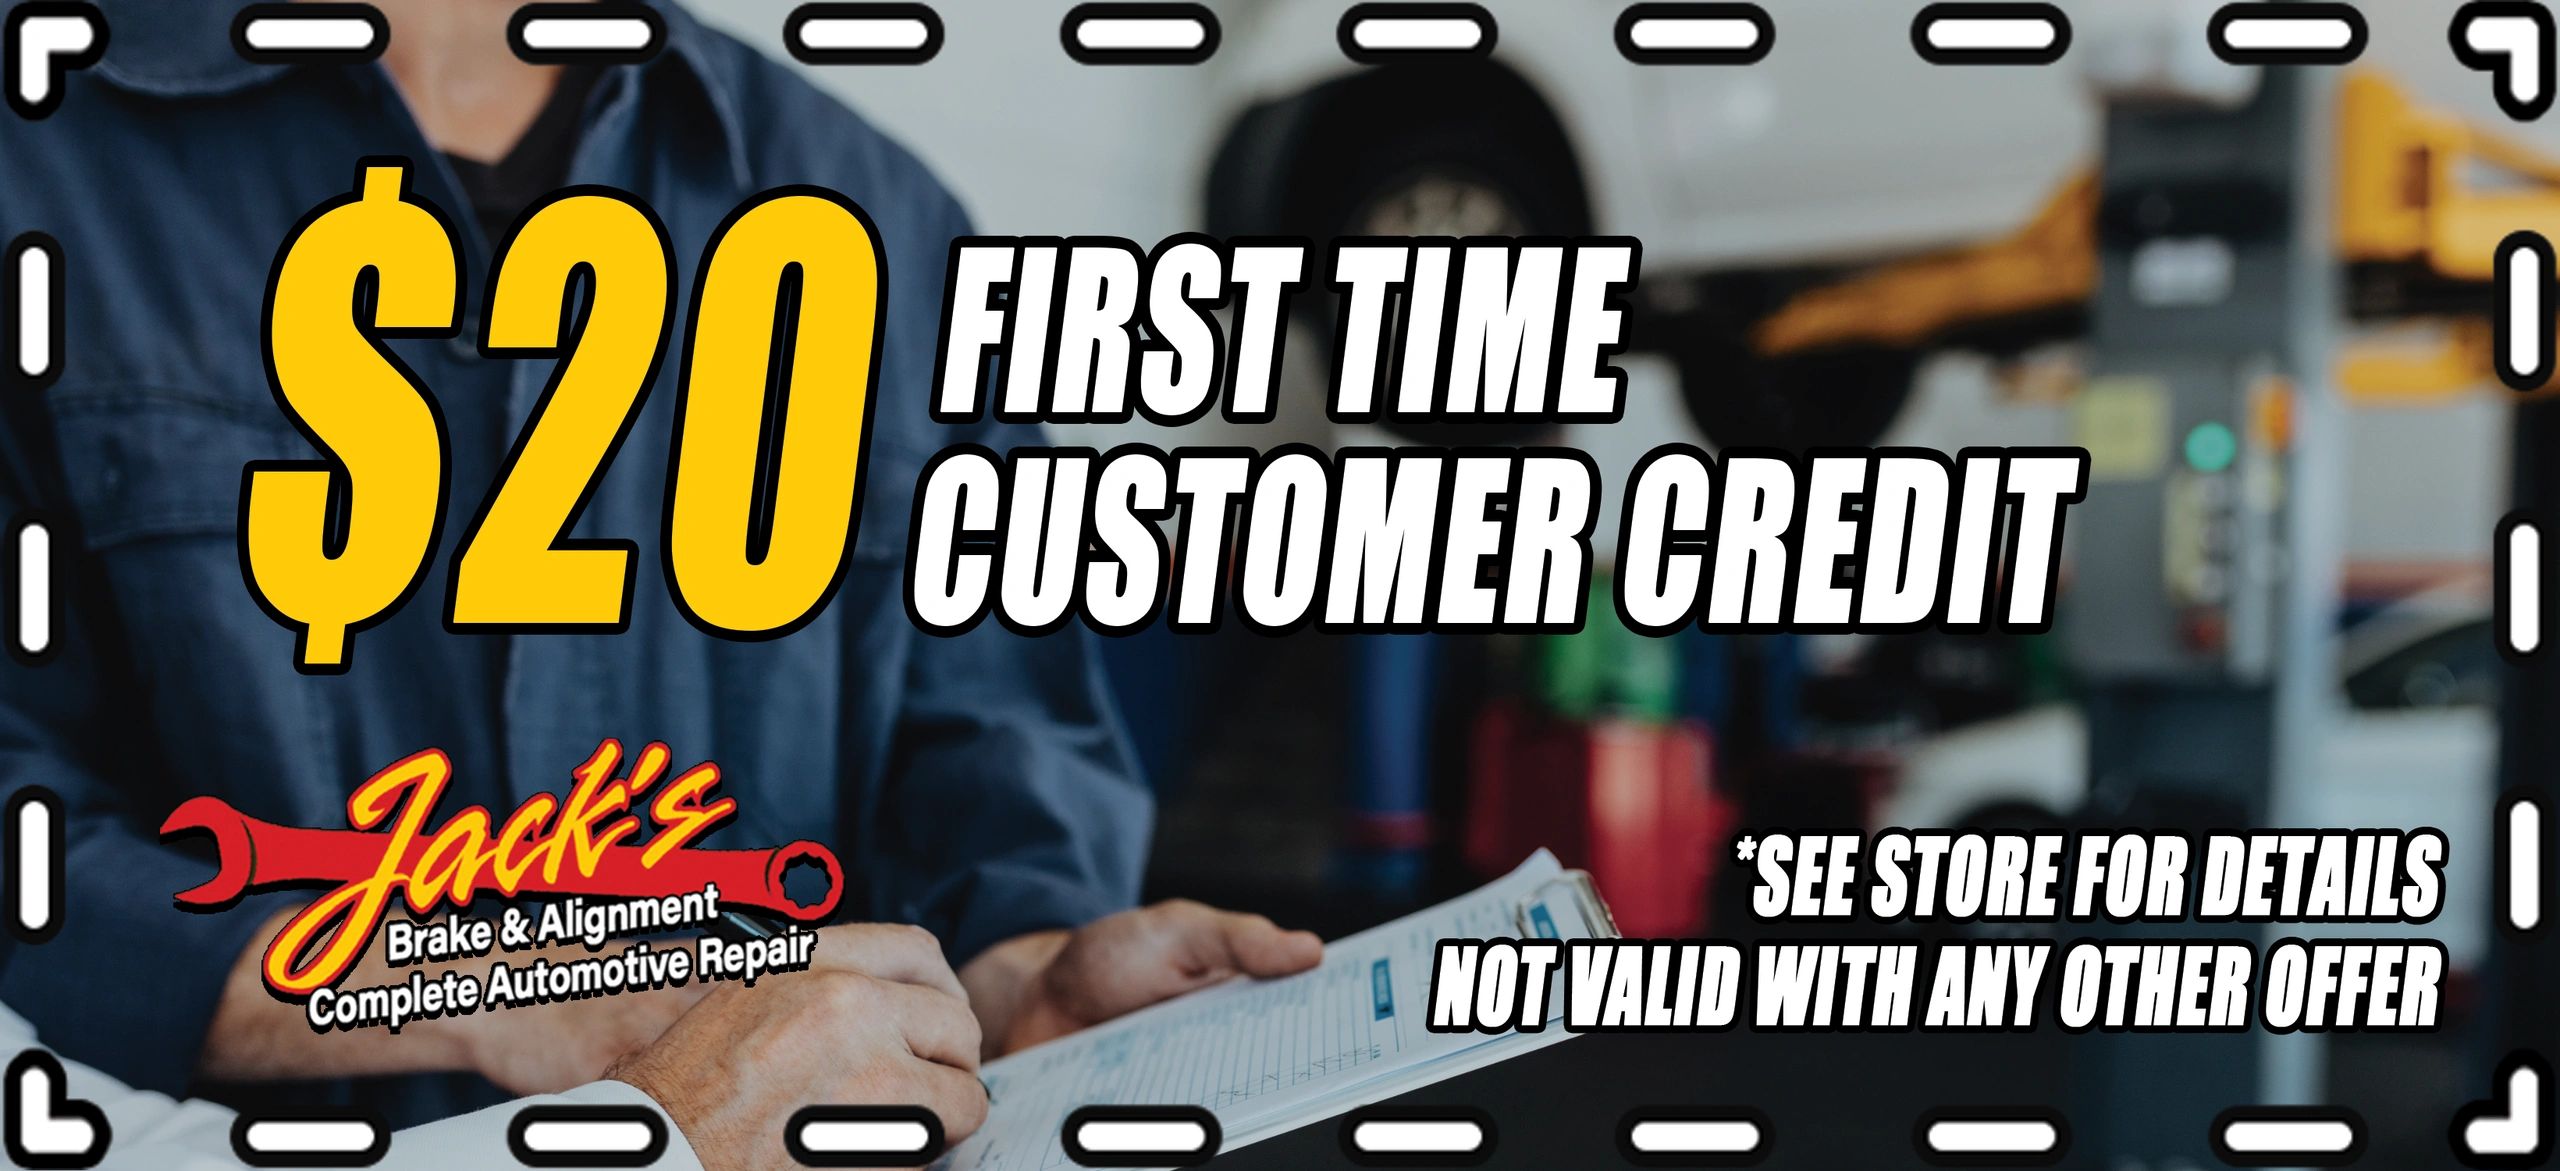 Auto repair, coupons, auto deals, customer care, customer credit, davenport iowa, mechanic